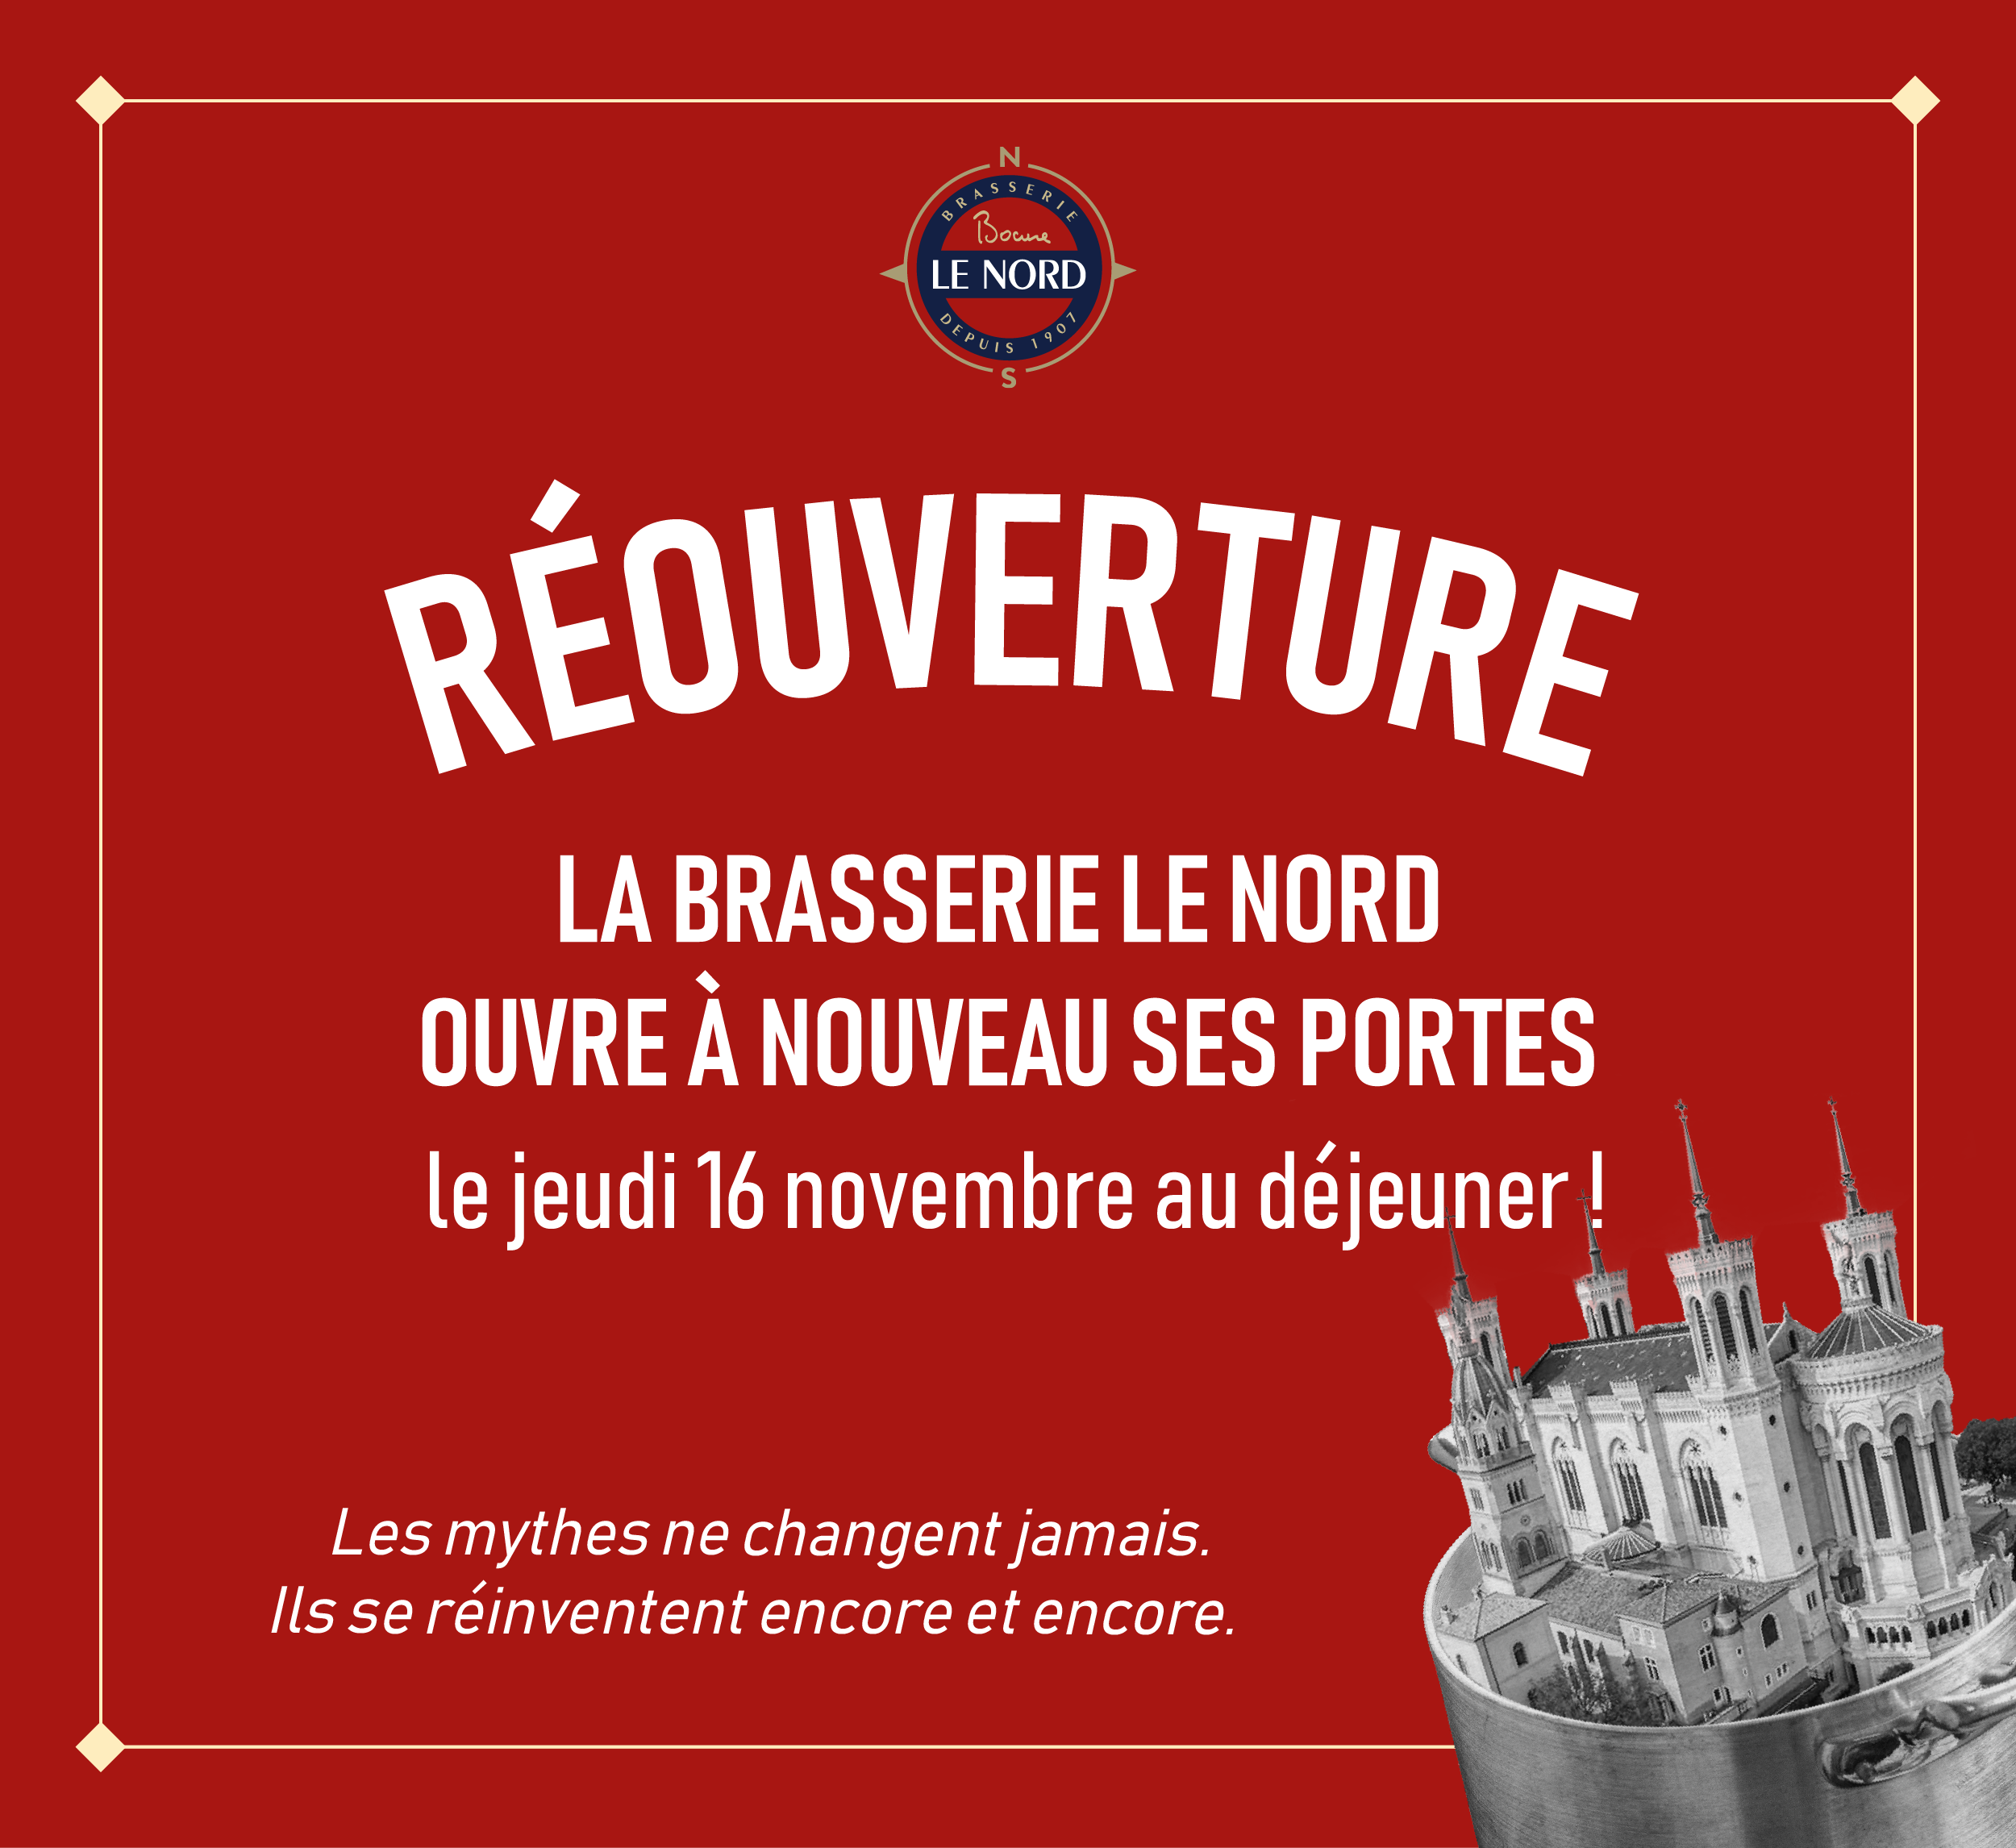 RE-OUVERTURE-BRASSERIE-LE NORD